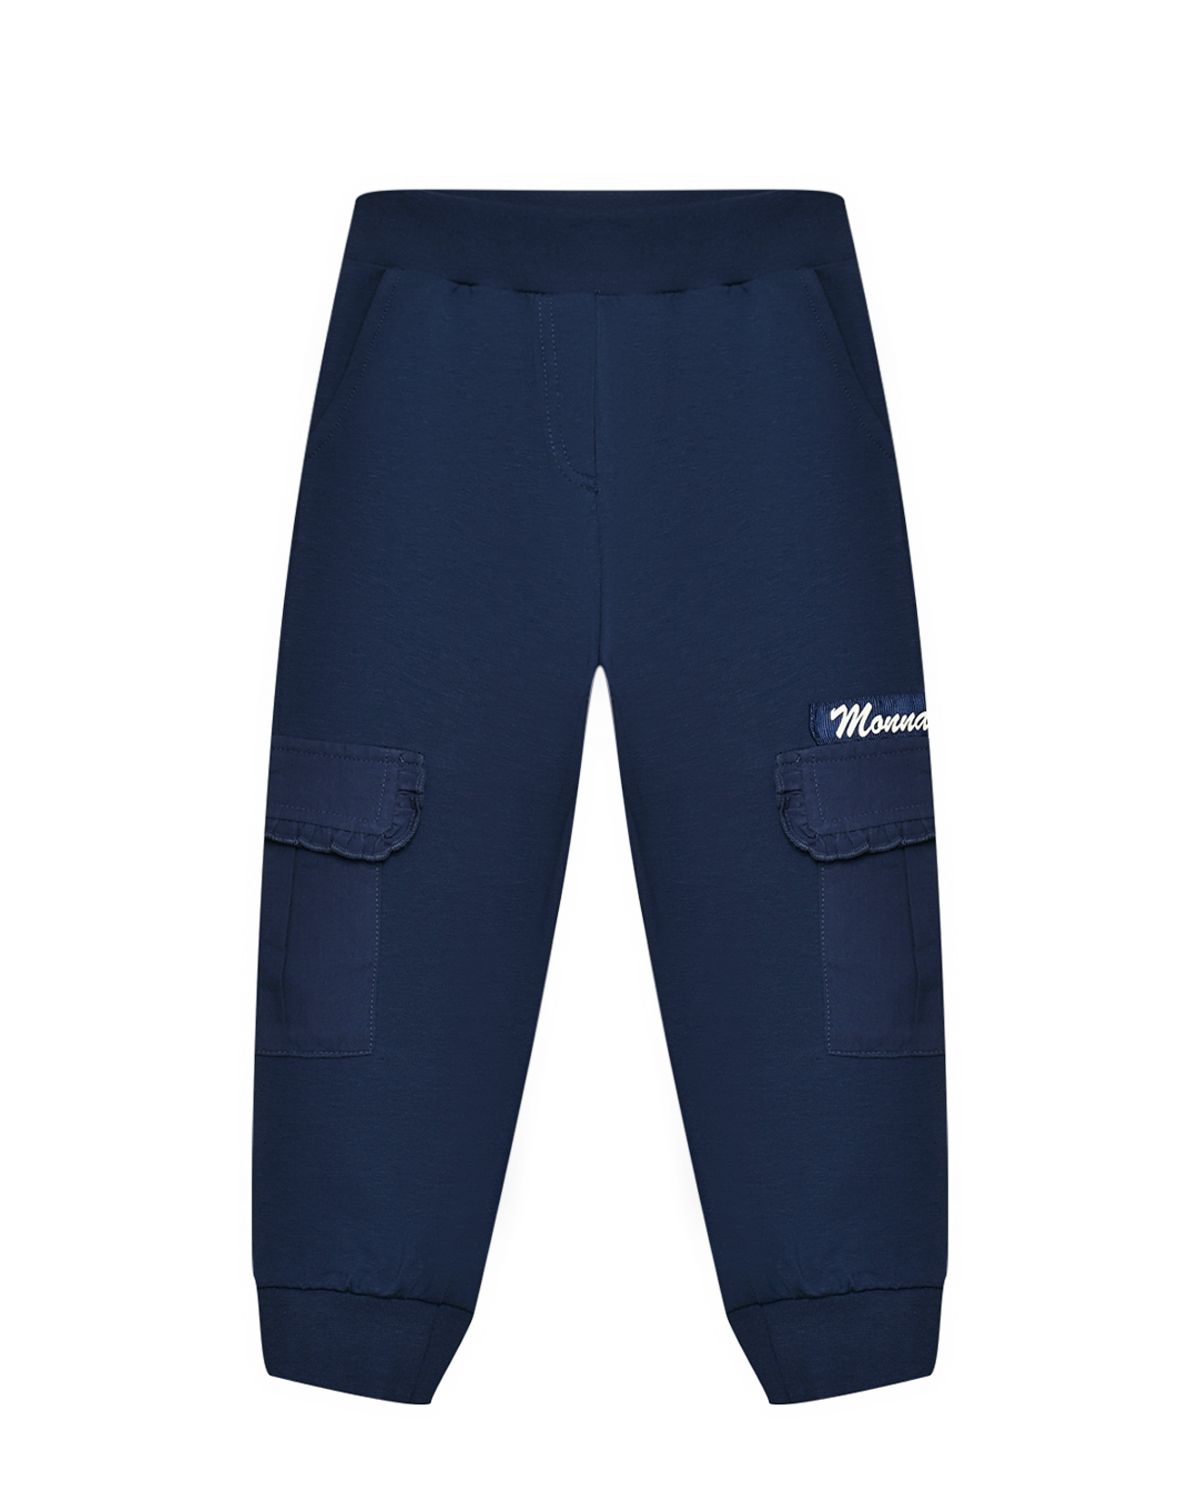 Брюки спортивные с карманами карго, темно-синие Monnalisa, размер 104, цвет синий - фото 1